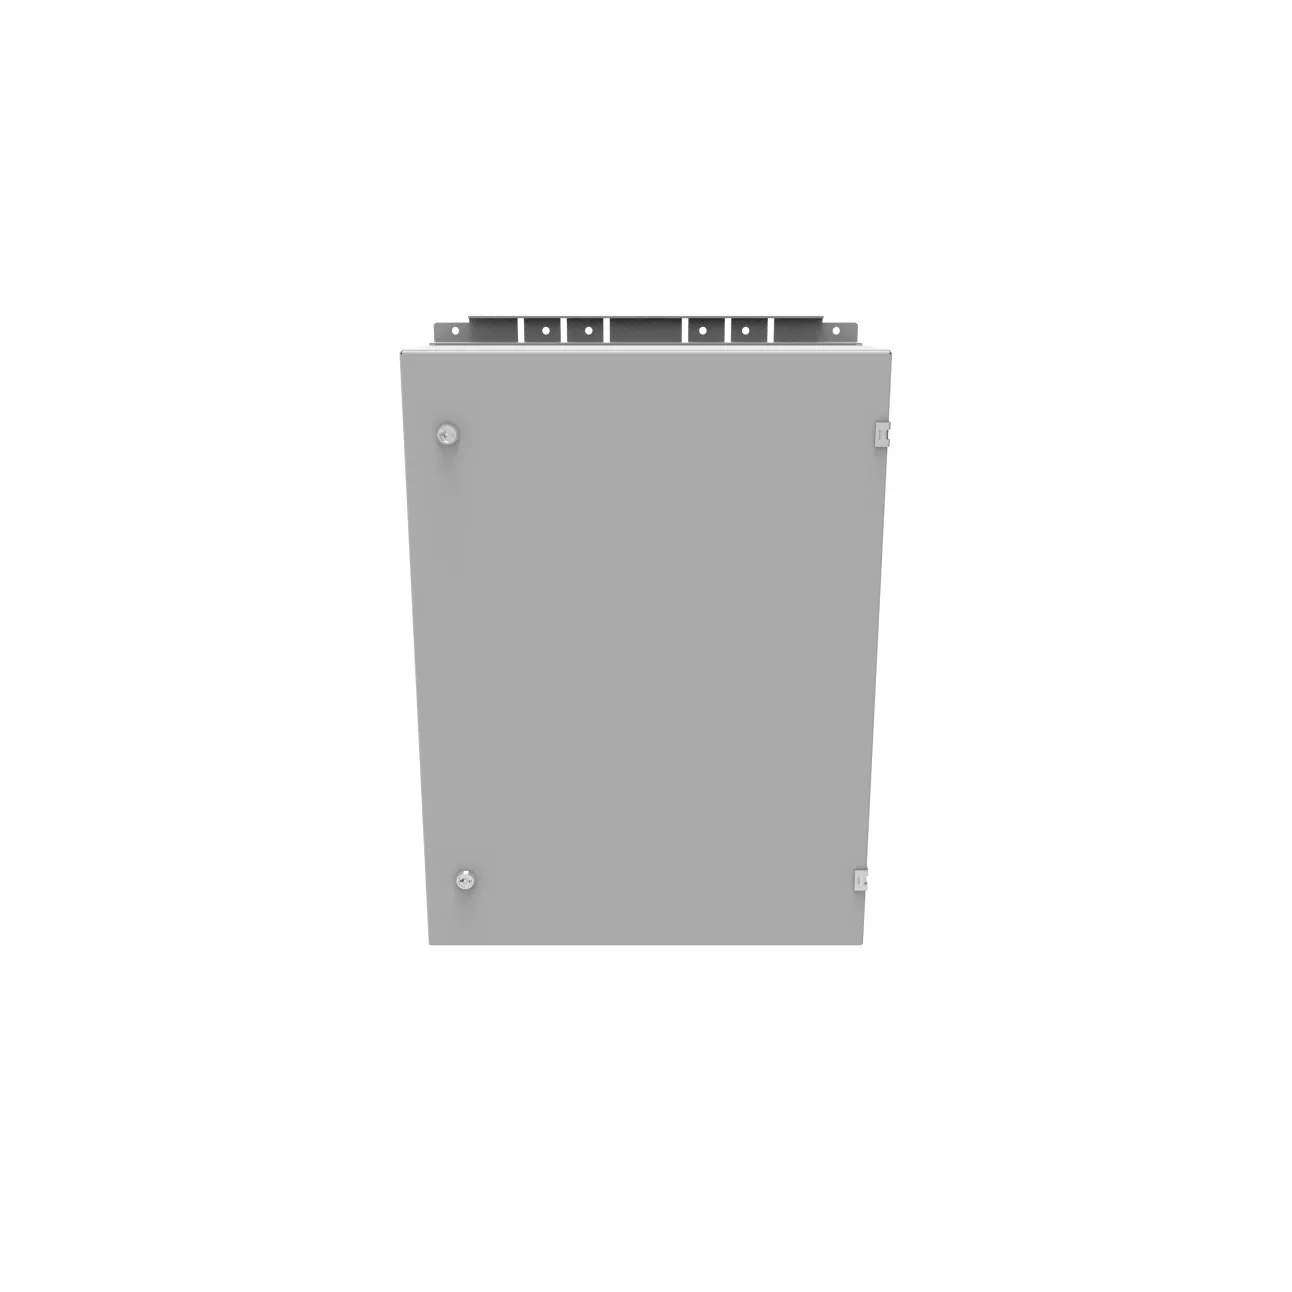 Настенный термошкаф 600x800x250 мм, IP65 (нагрев, контроль климата)